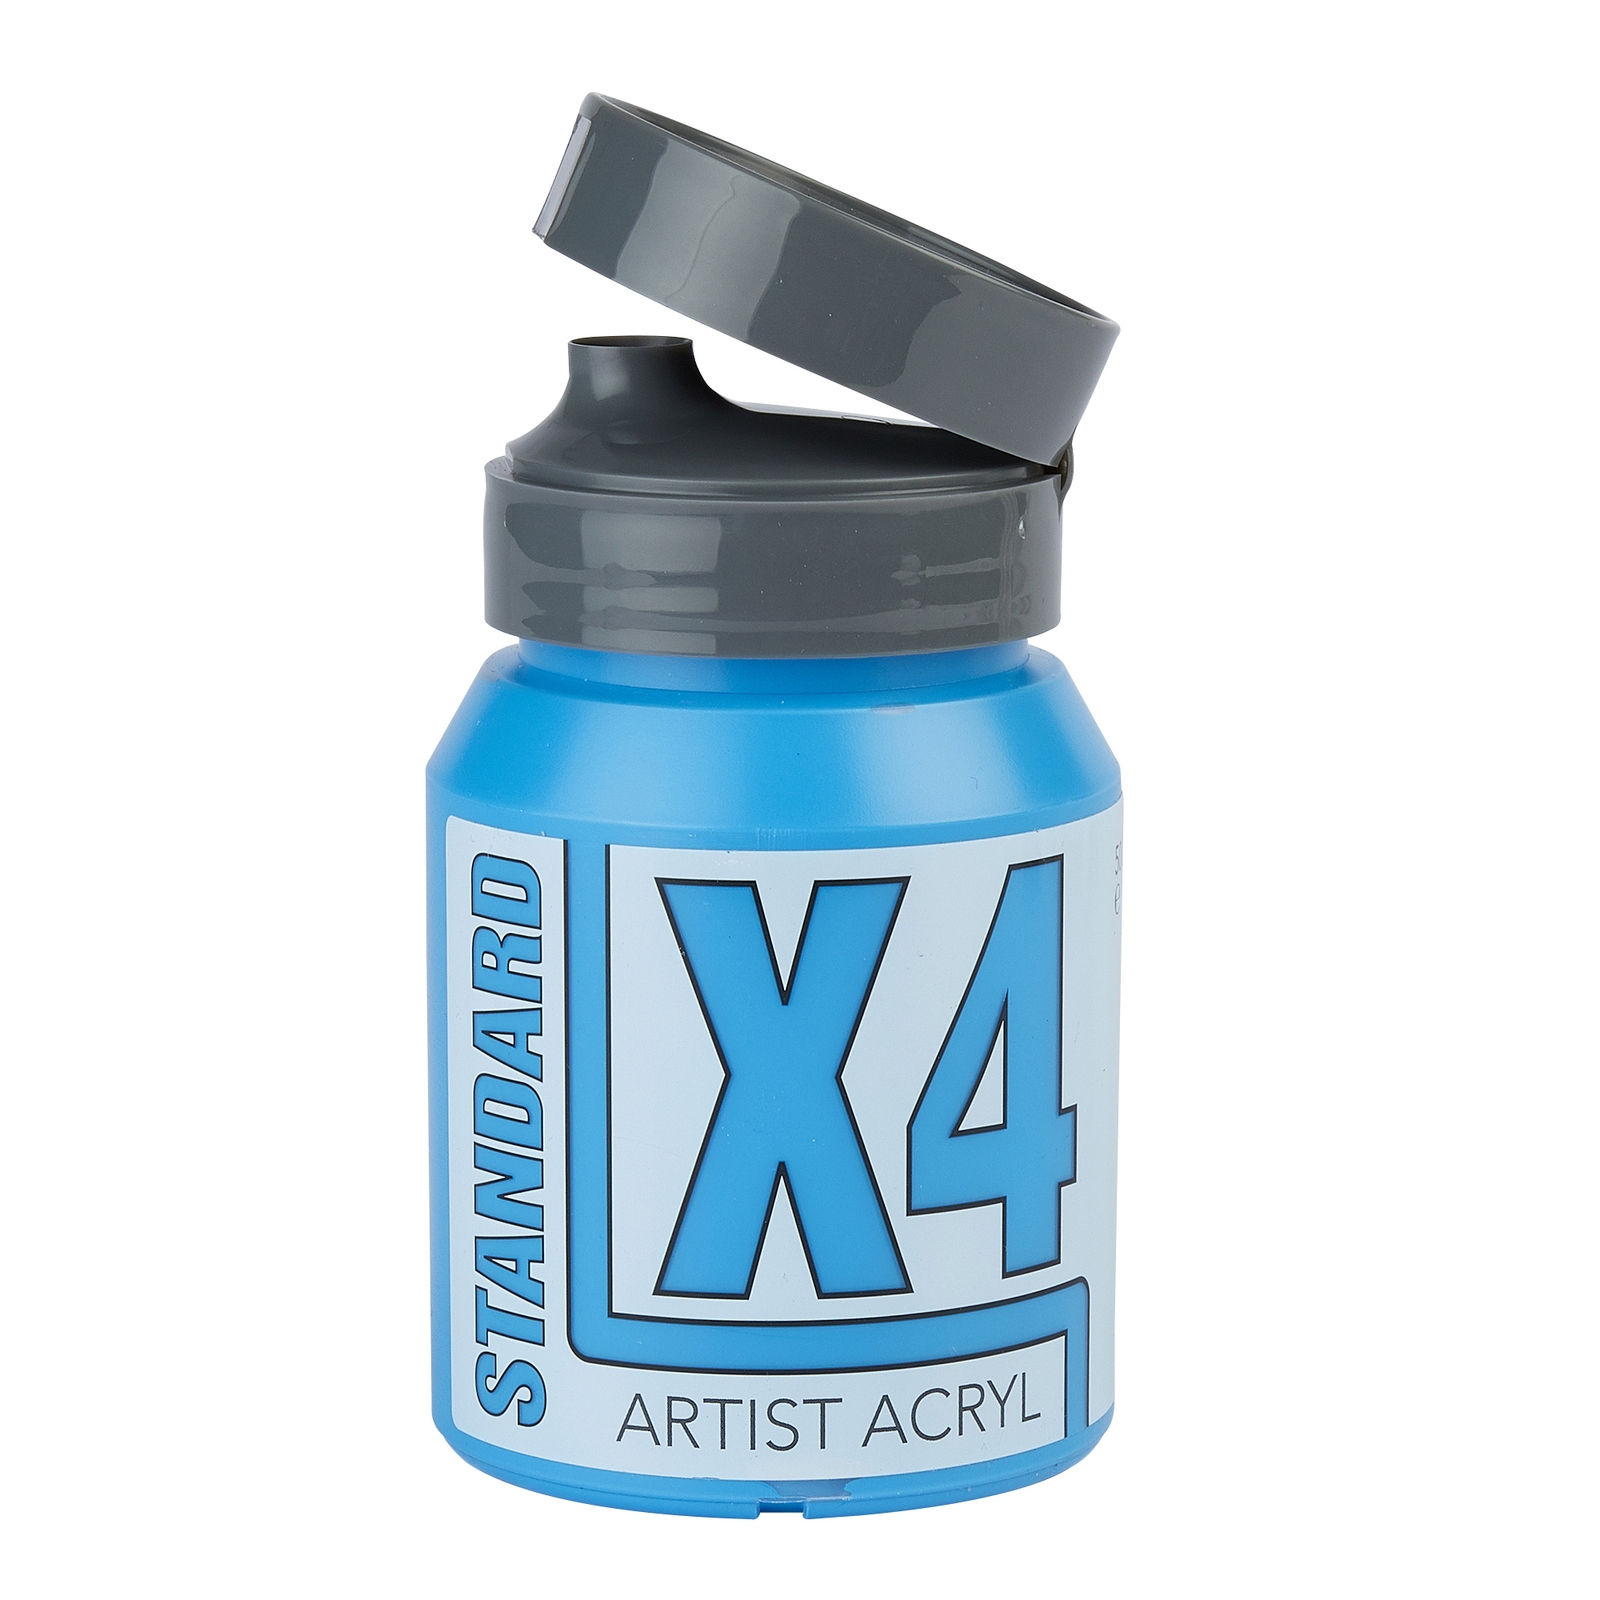 Specialist Crafts X4 Standard Brilliant Blue Acryl/Acrylic Paint - 500ml - Each